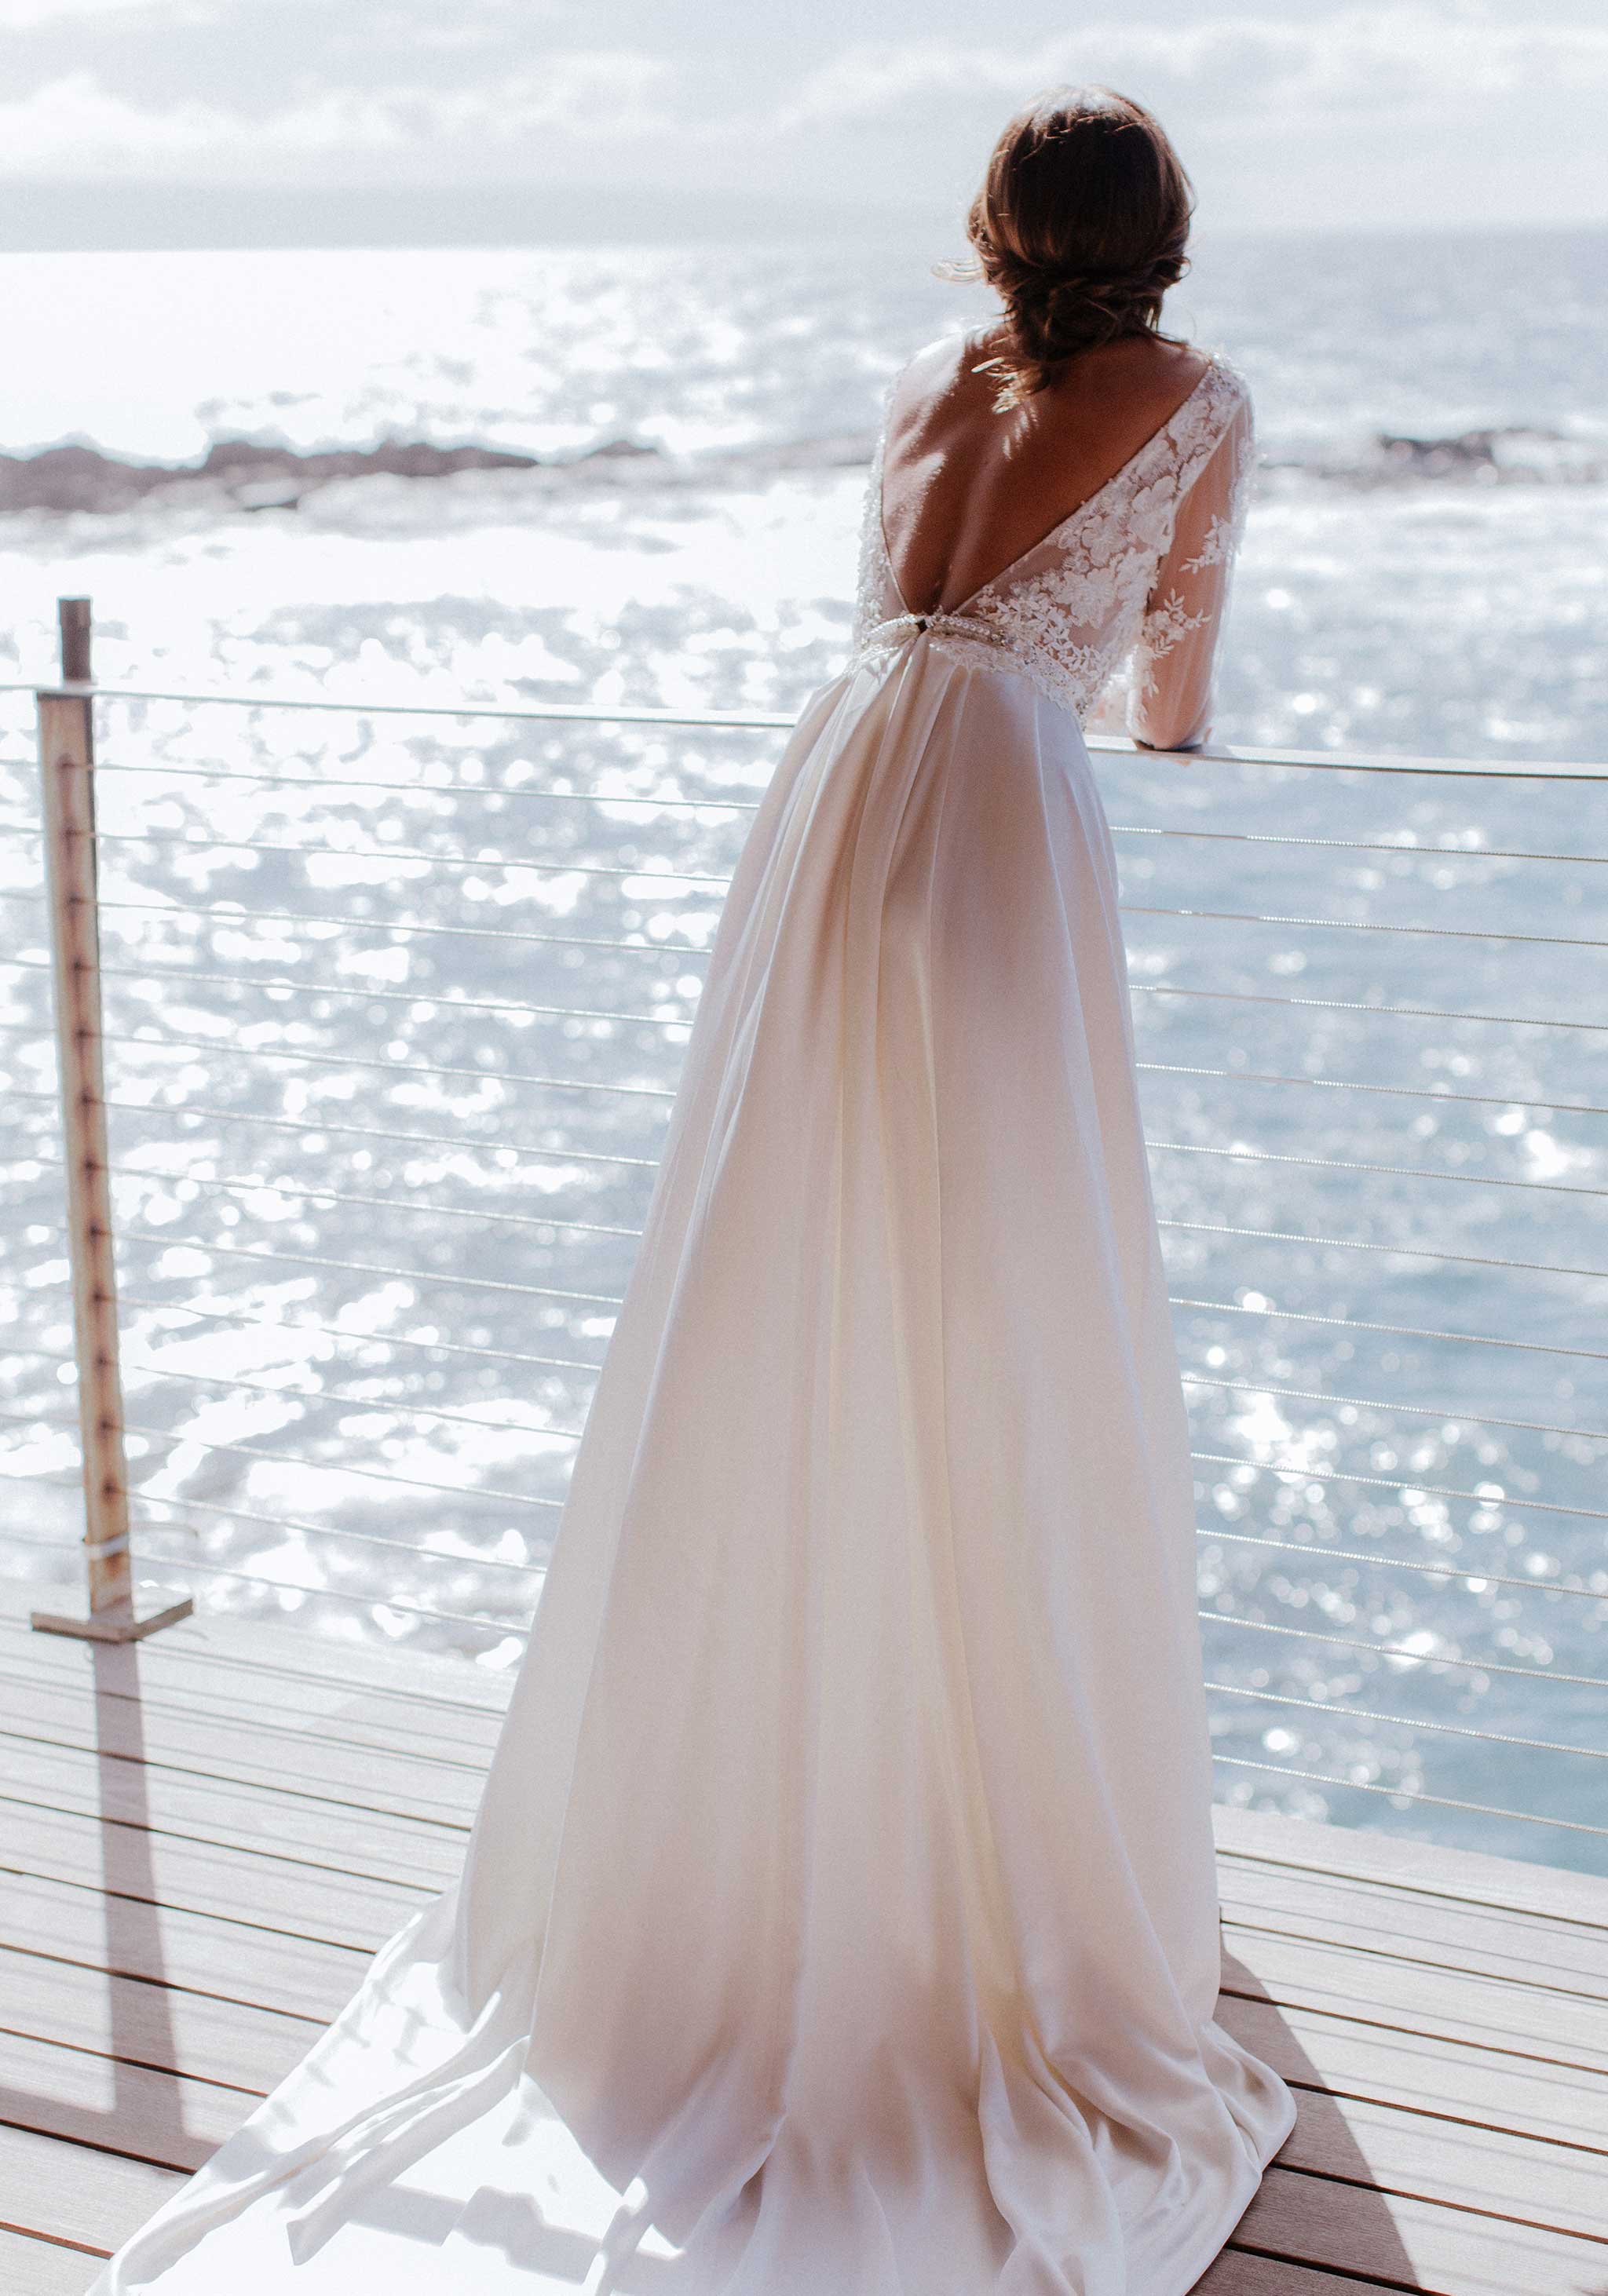 Greek wedding dress. Open bodice with shaped V-neck, neat draping,  decorative buttons - BridesHouse Wedding Salon